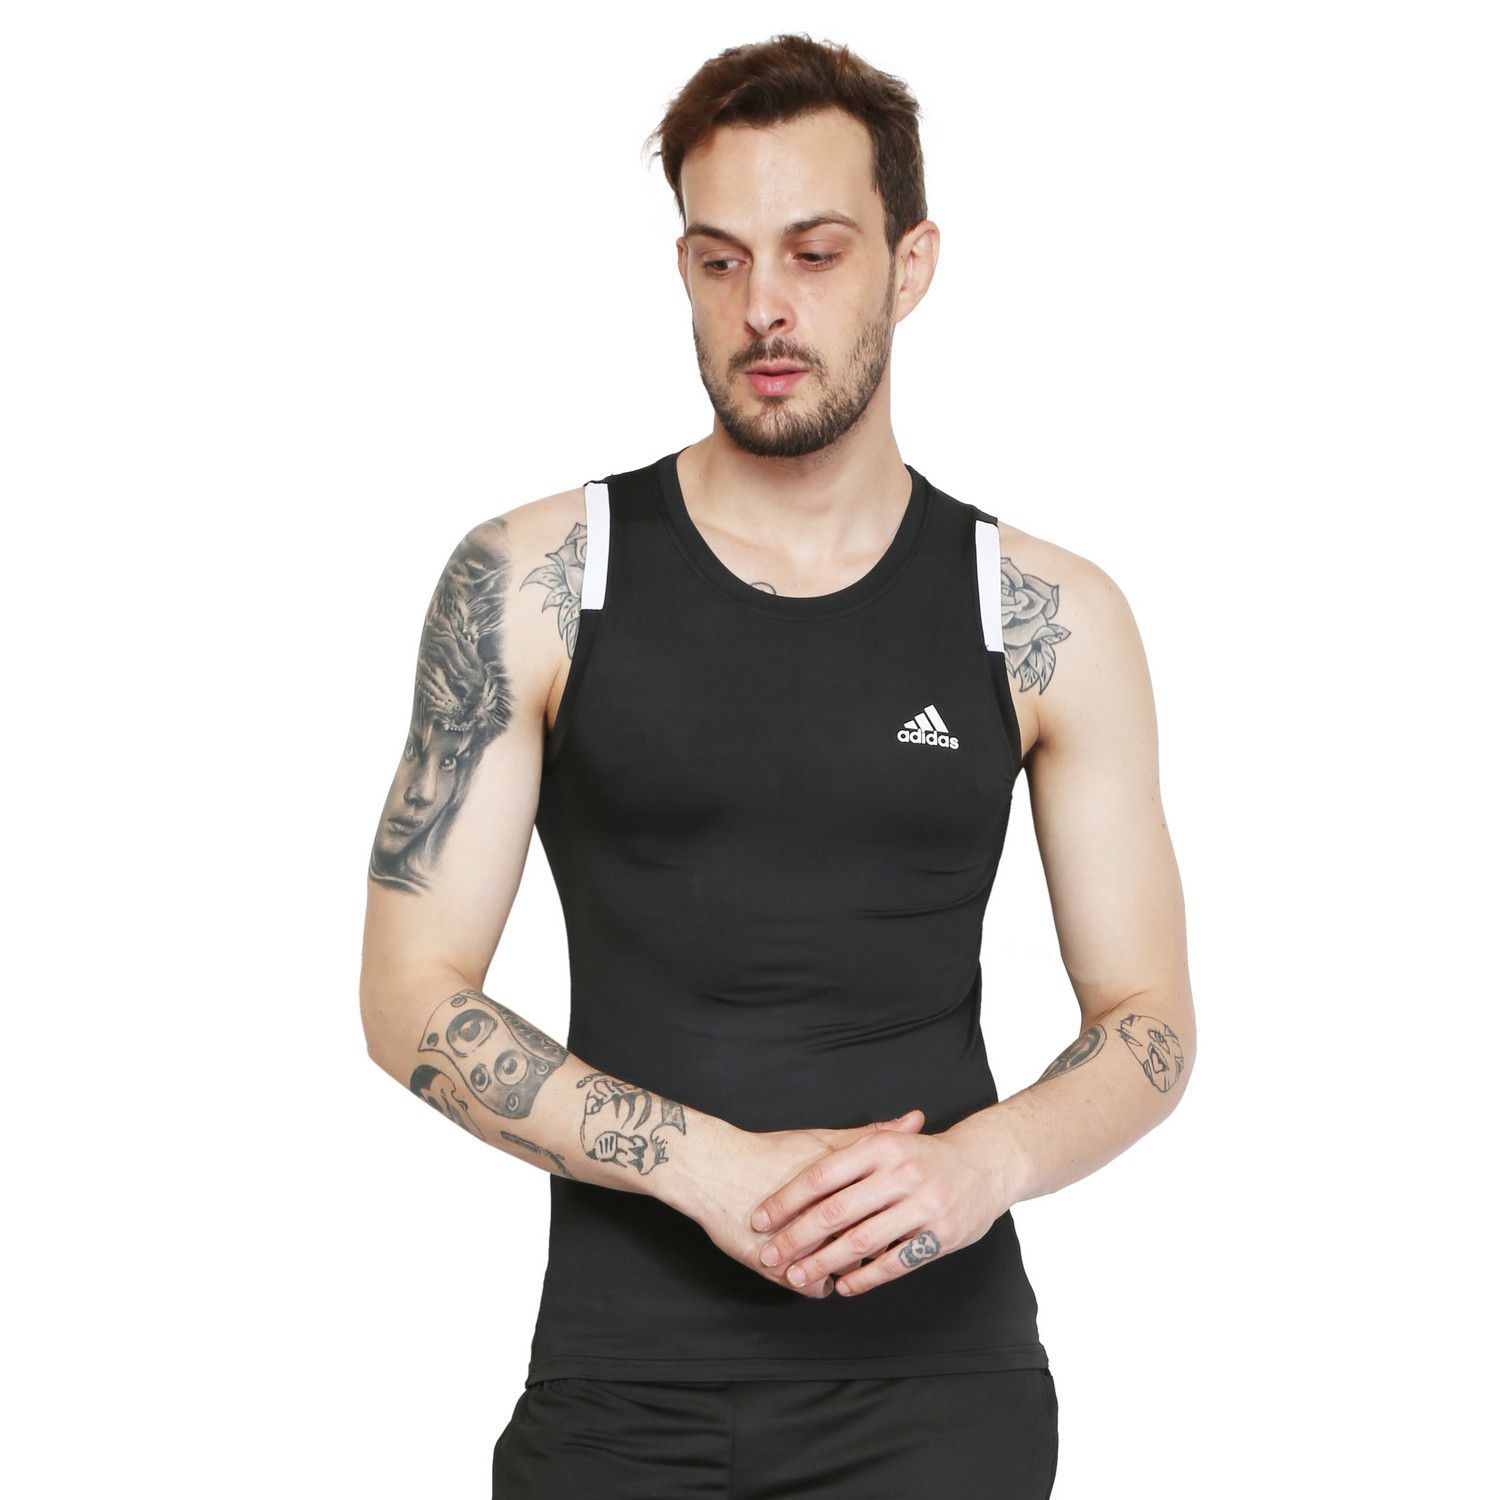 Adidas Black Sleeveless Vests - Buy Adidas Black Sleeveless Vests